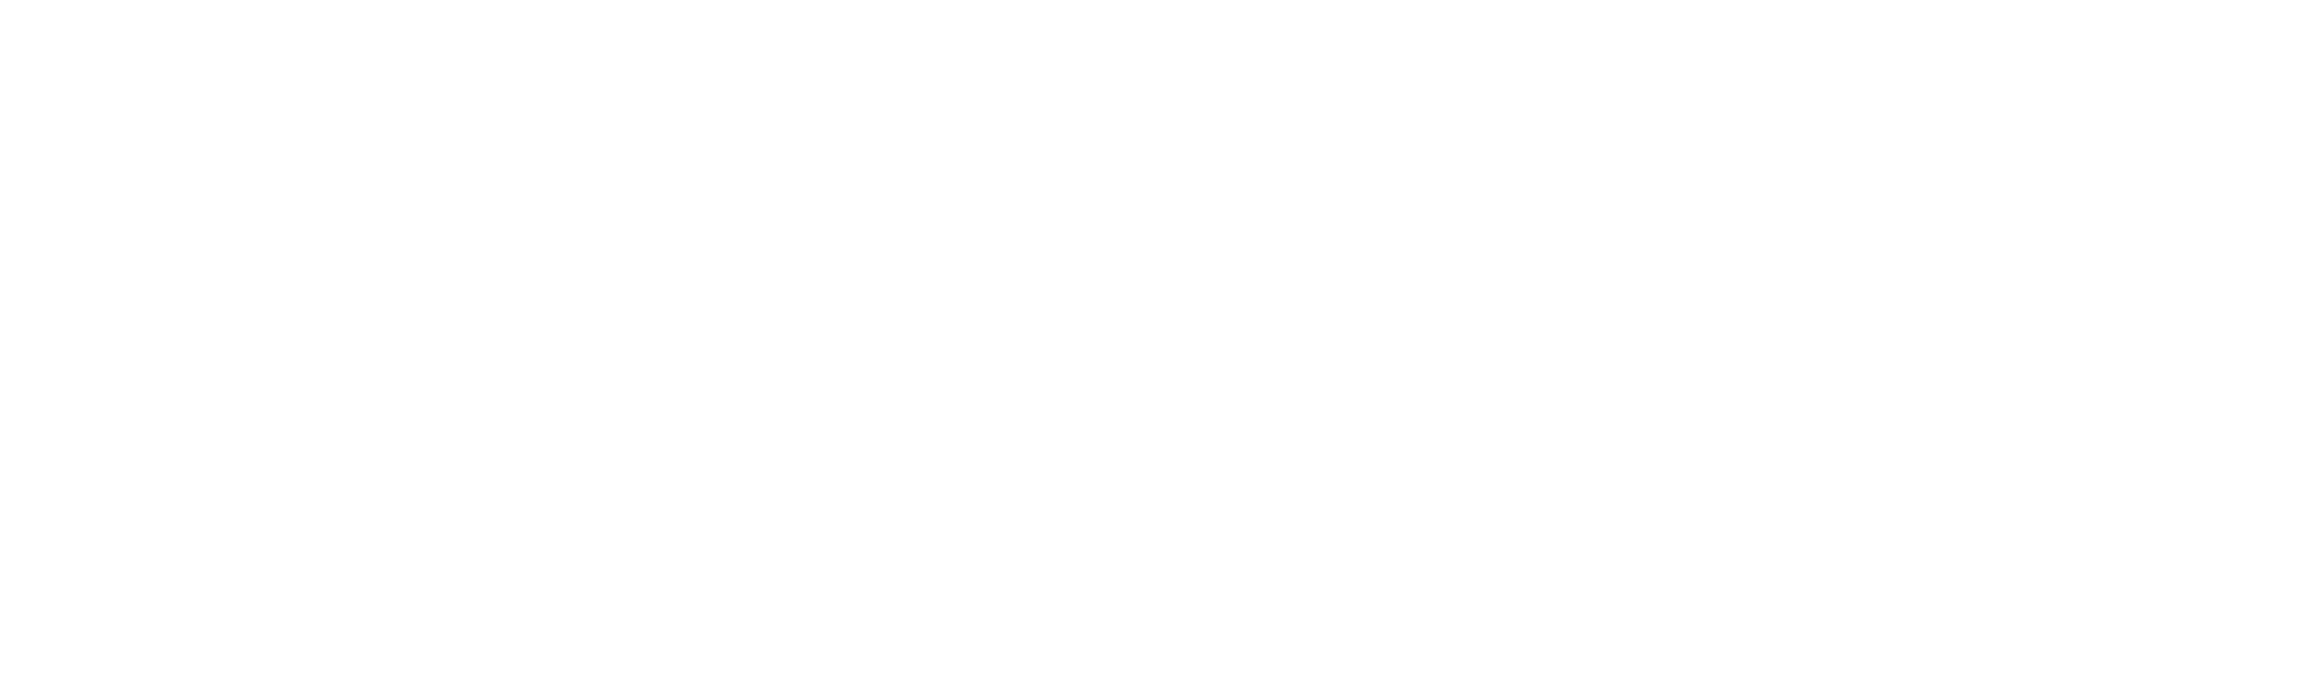 Virginia Western Logo White